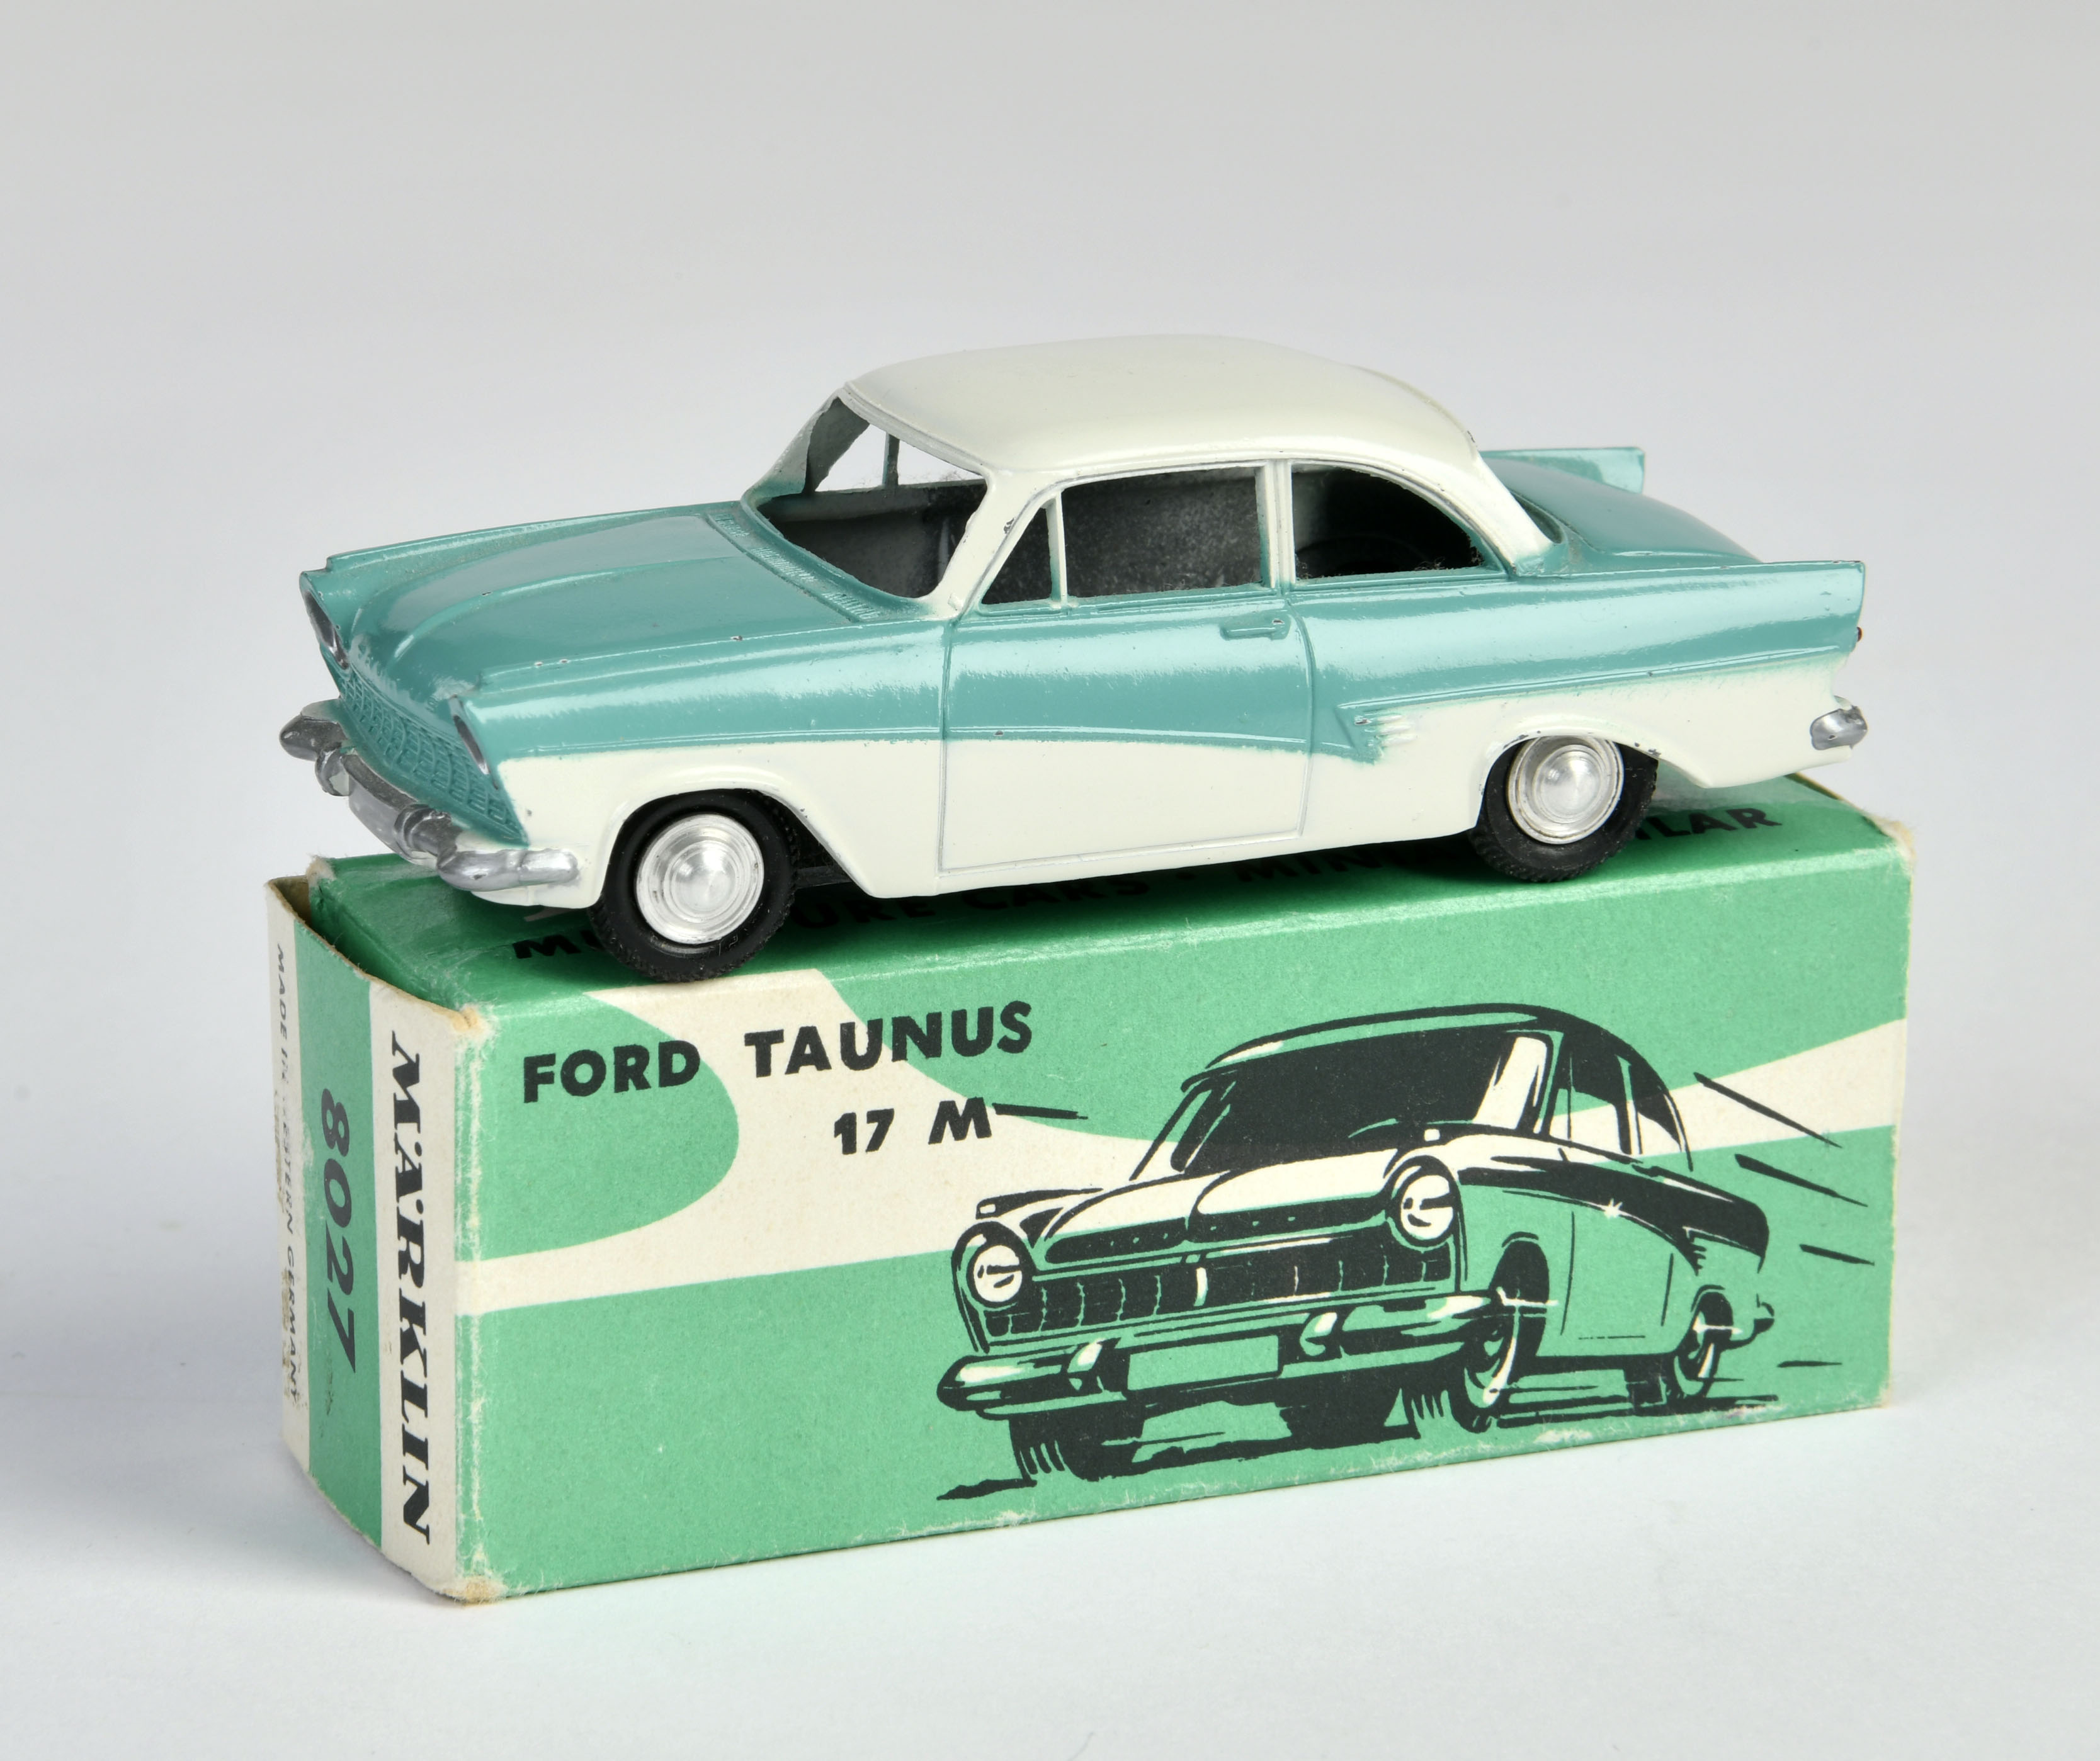 Märklin, Ford Taunus 17 M de Luxe, W.-Germany, 1:43, diecast, box C 1-, C 1